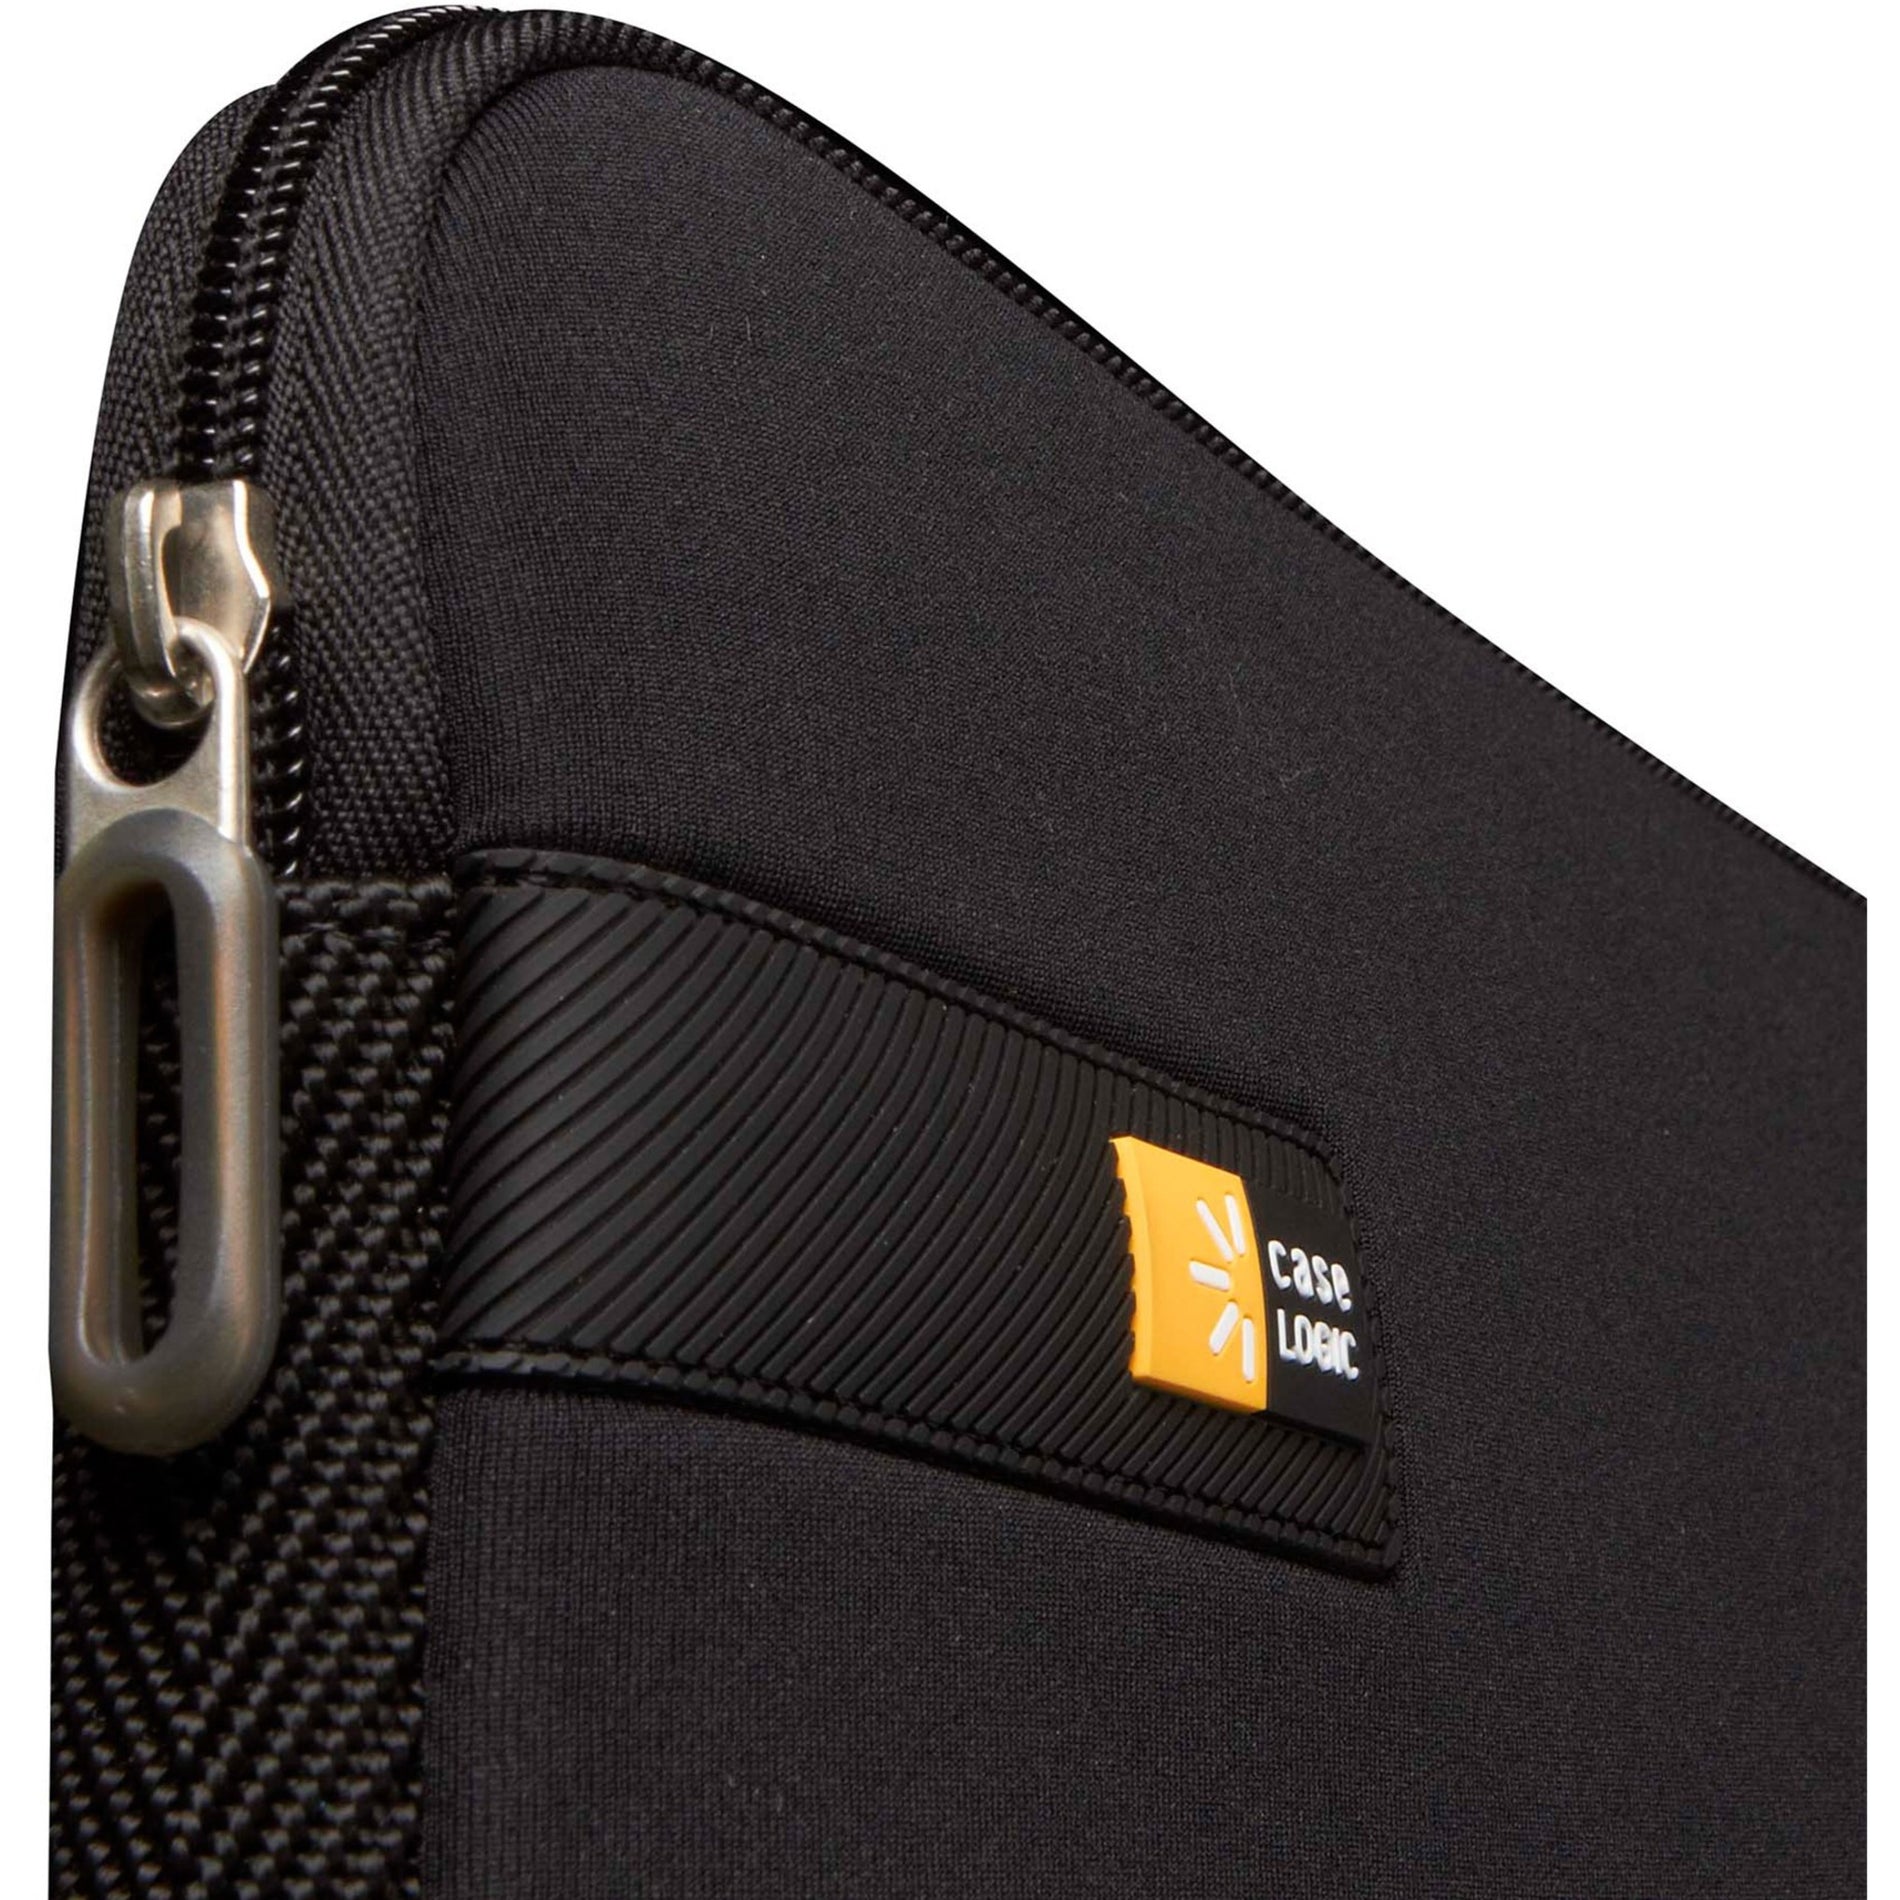 Case Logic 3201354 14" Laptop Sleeve Sleek and Protective Black Carrying Case Discontinued  ブランド名：ケースロジック ケース ロジック 3201354 14" ラップトップ スリーブ、スリークで保護力のあるブラック キャリング ケース【販売終了】